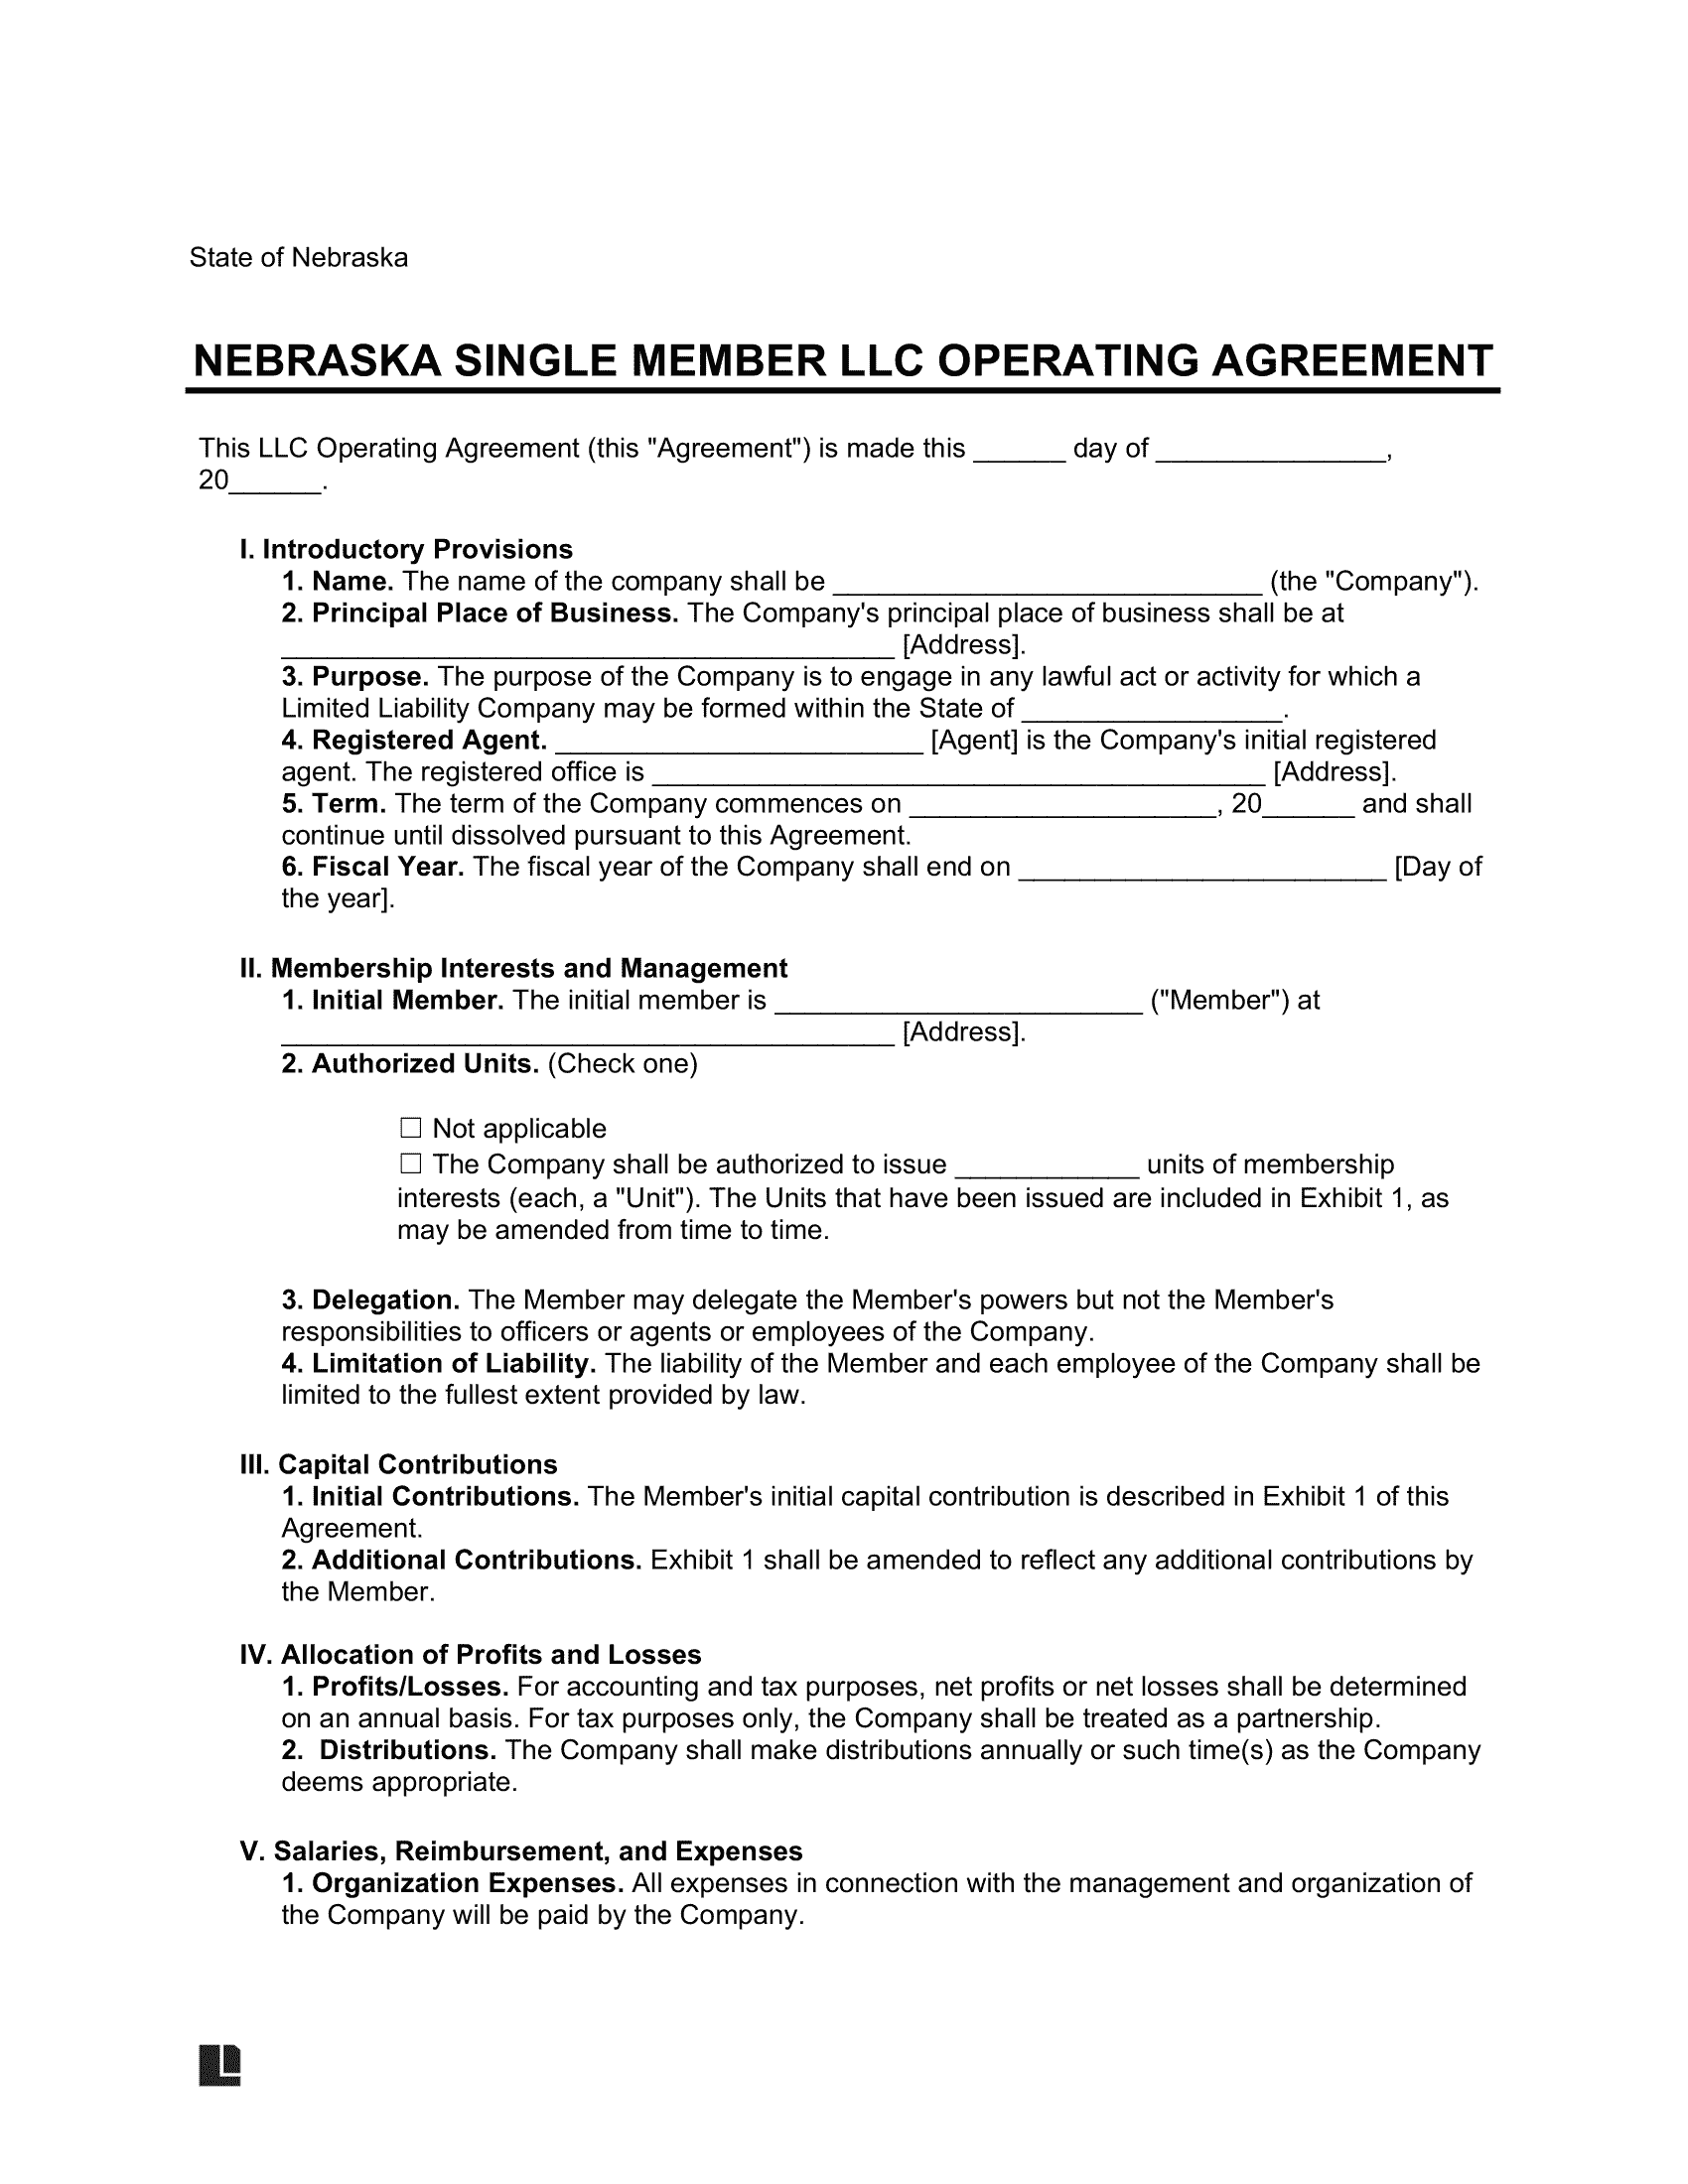 Nebraska Single Member LLC Operating Agreement Form